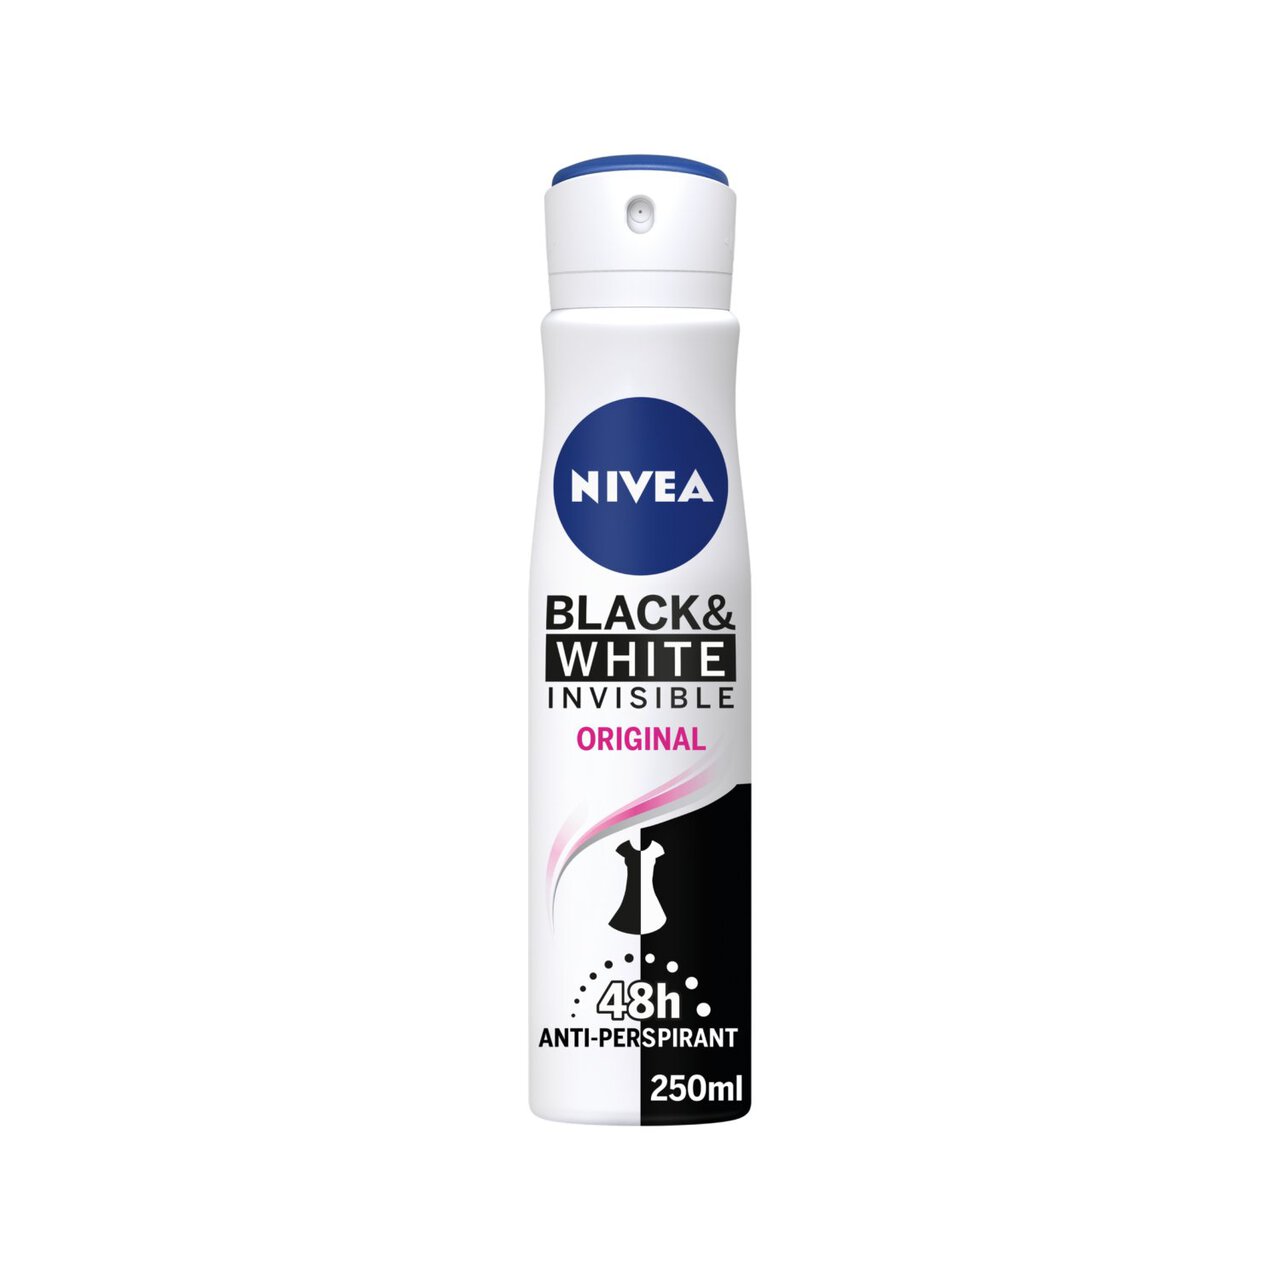 NIVEA Black & White Original Anti-Perspirant Deodorant Spray 250ml